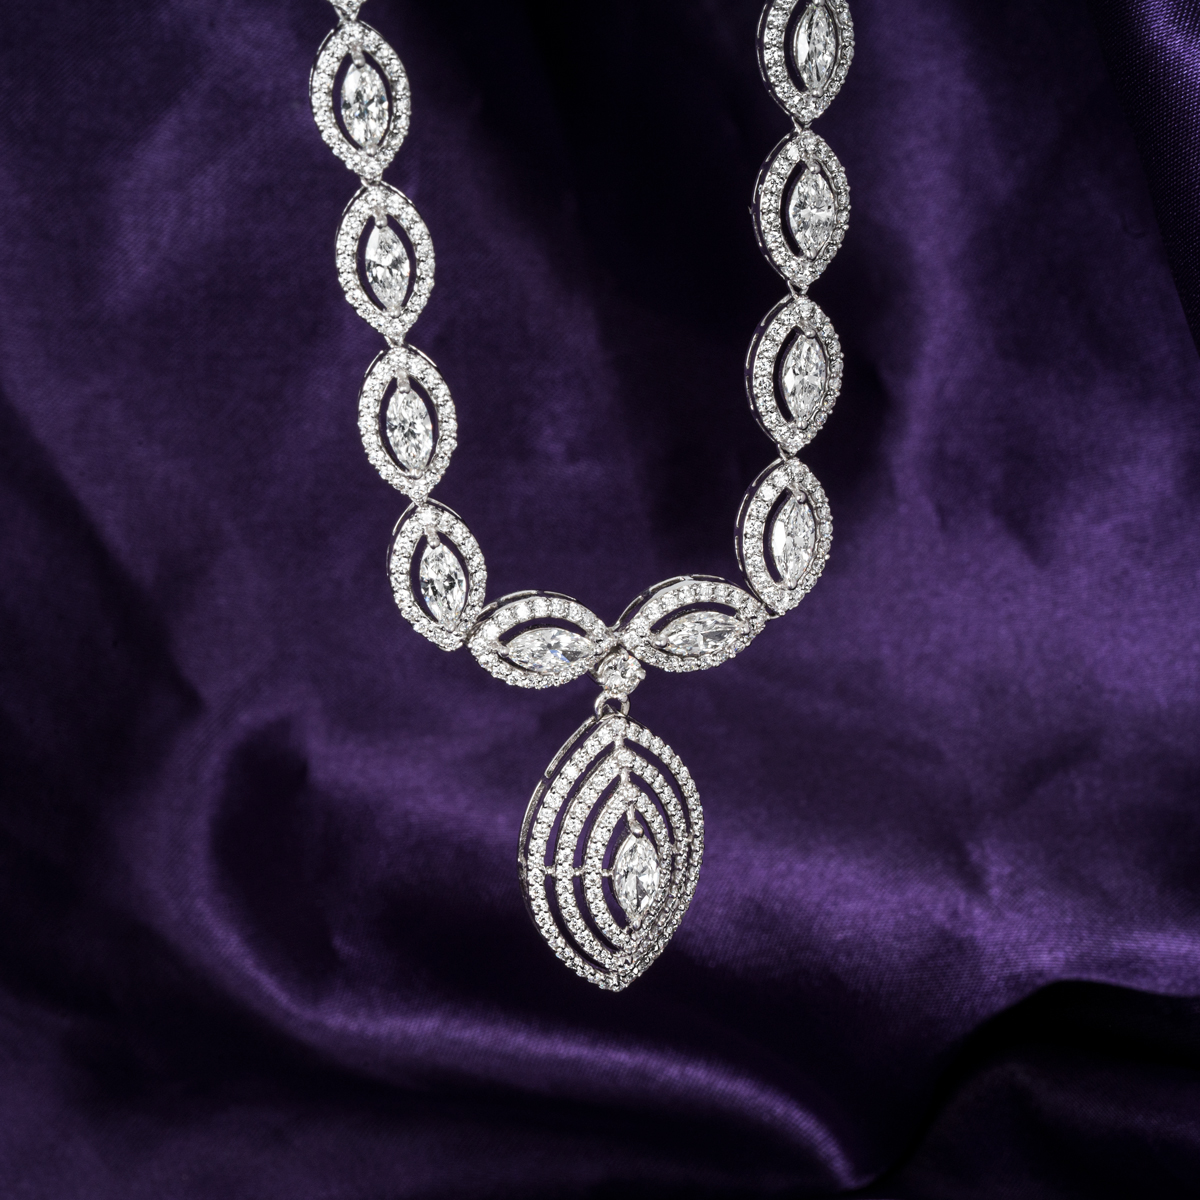 White Gold Diamond Necklace 14.45ct TDW